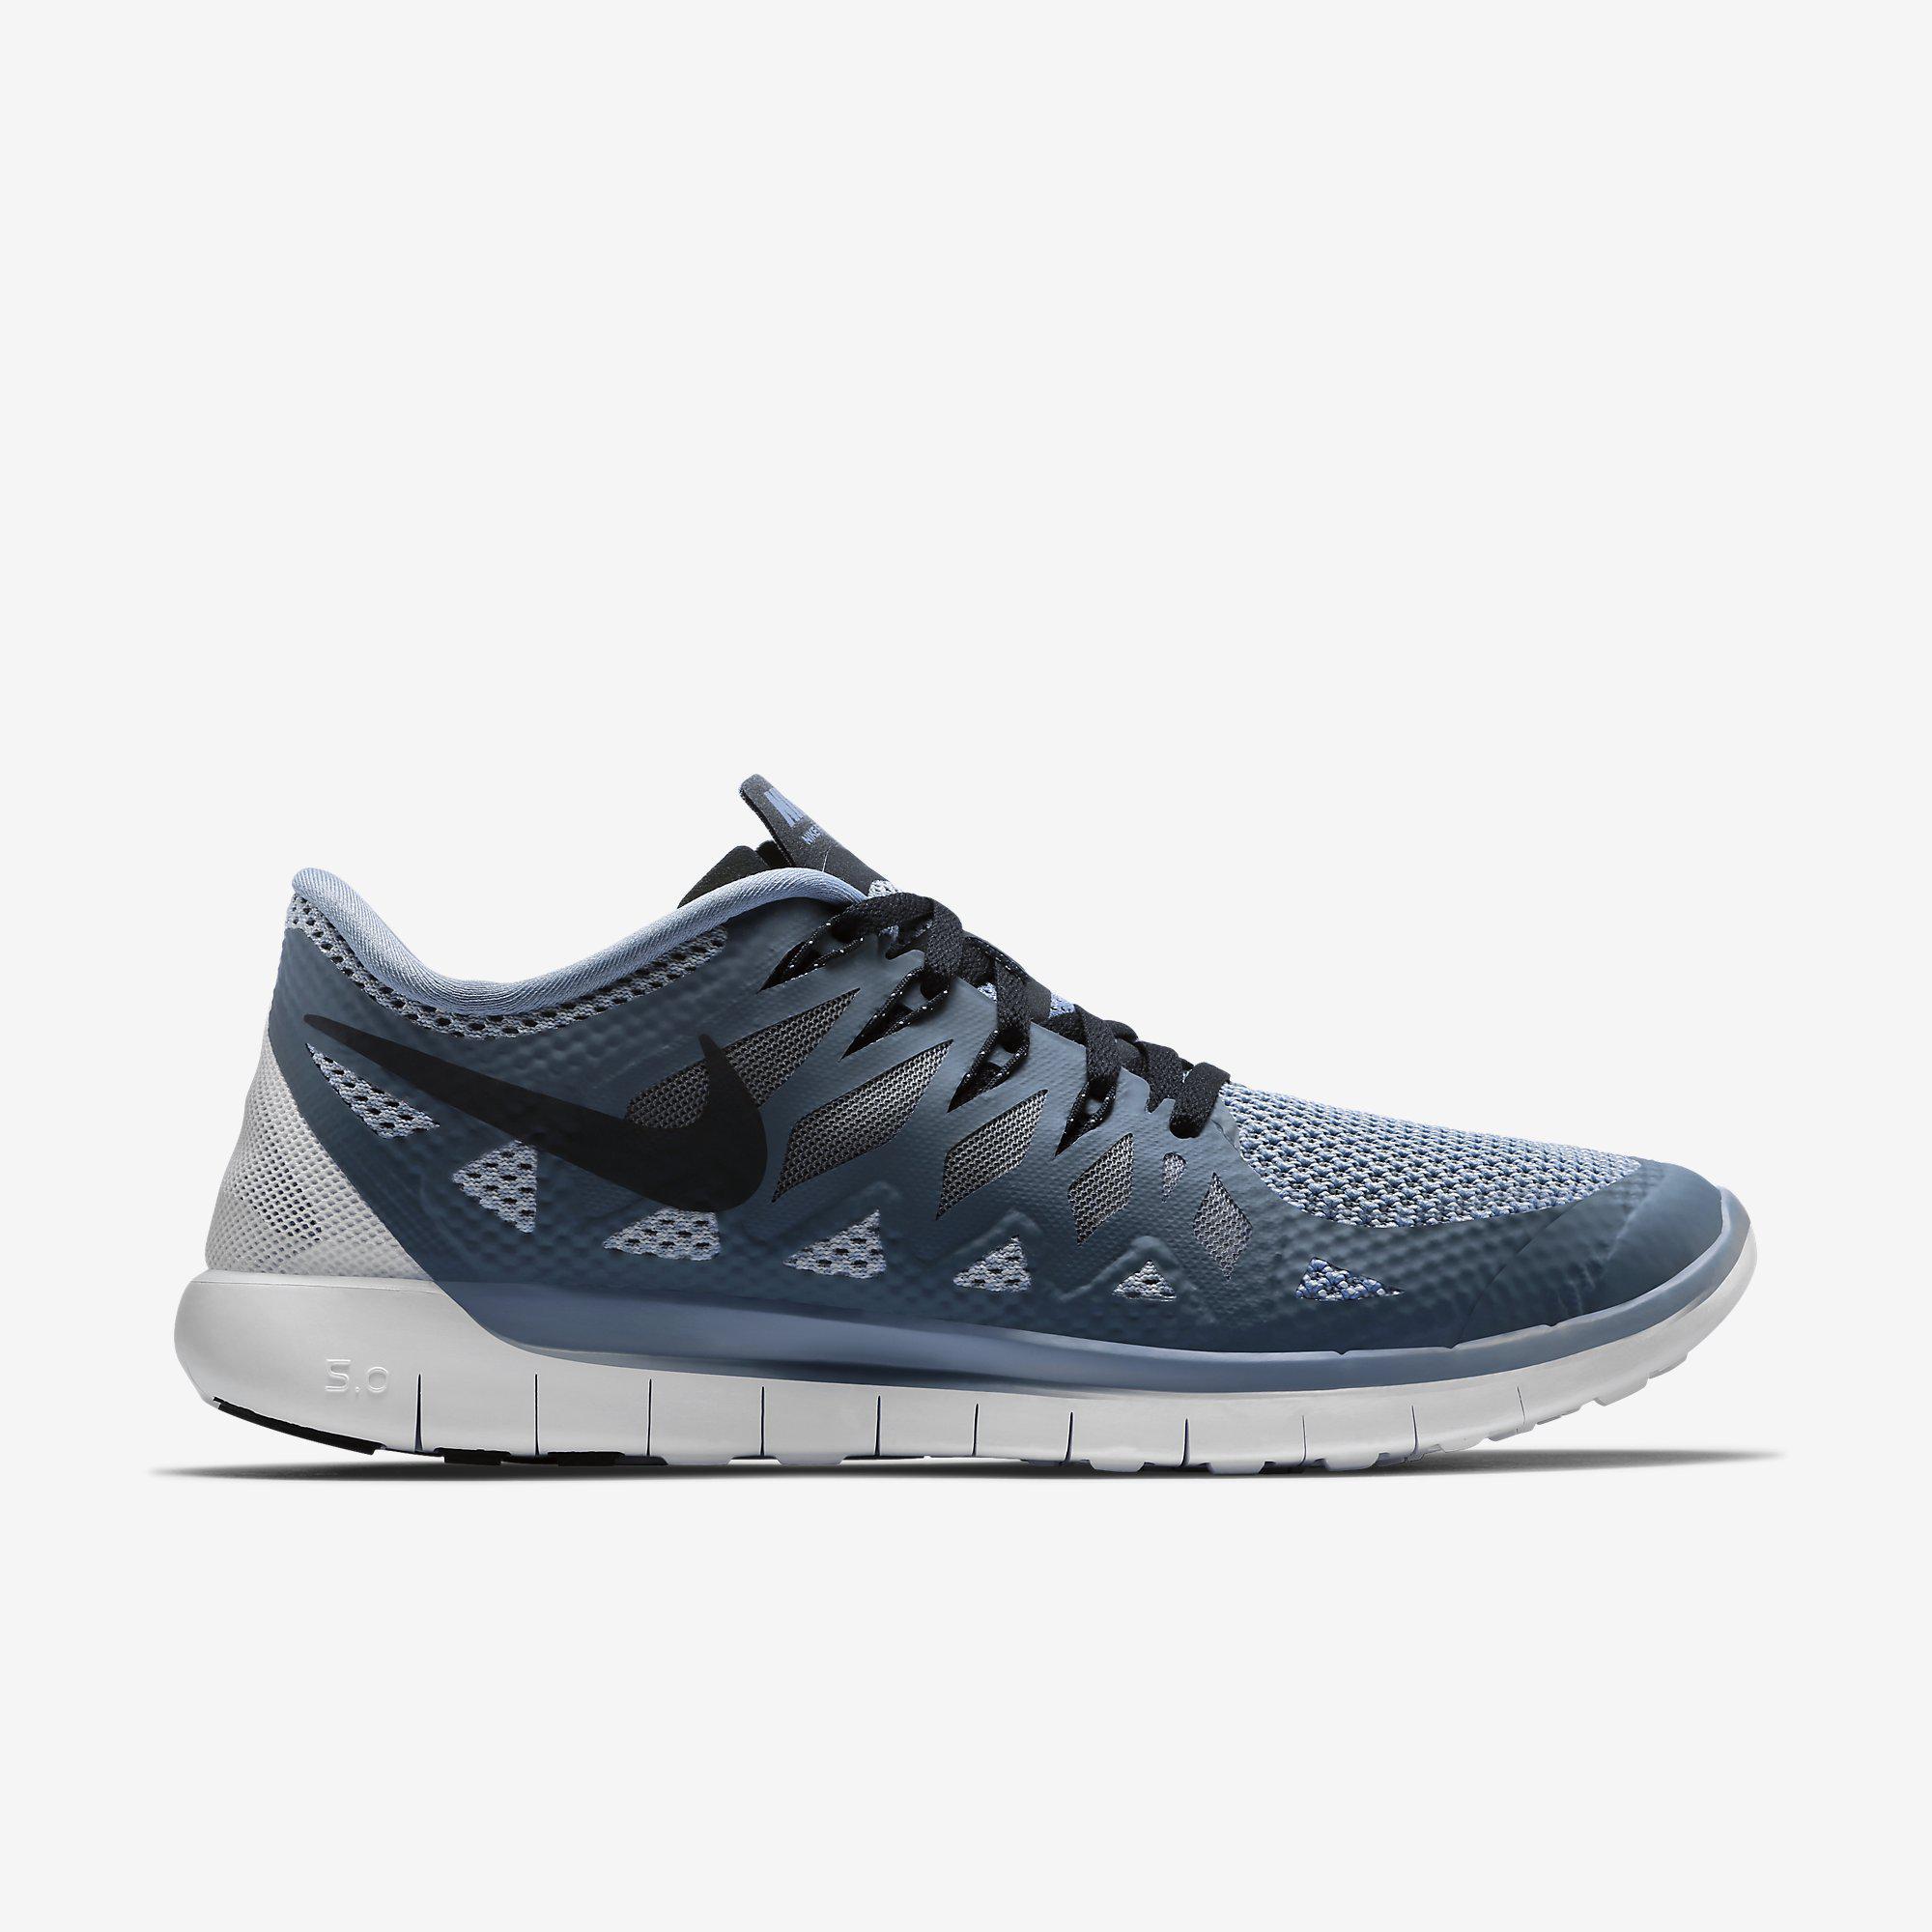 Cool Blue Wolf Logo - Nike Mens Free 5.0+ Running Shoes - Cool Blue/Wolf Grey - Tennisnuts.com